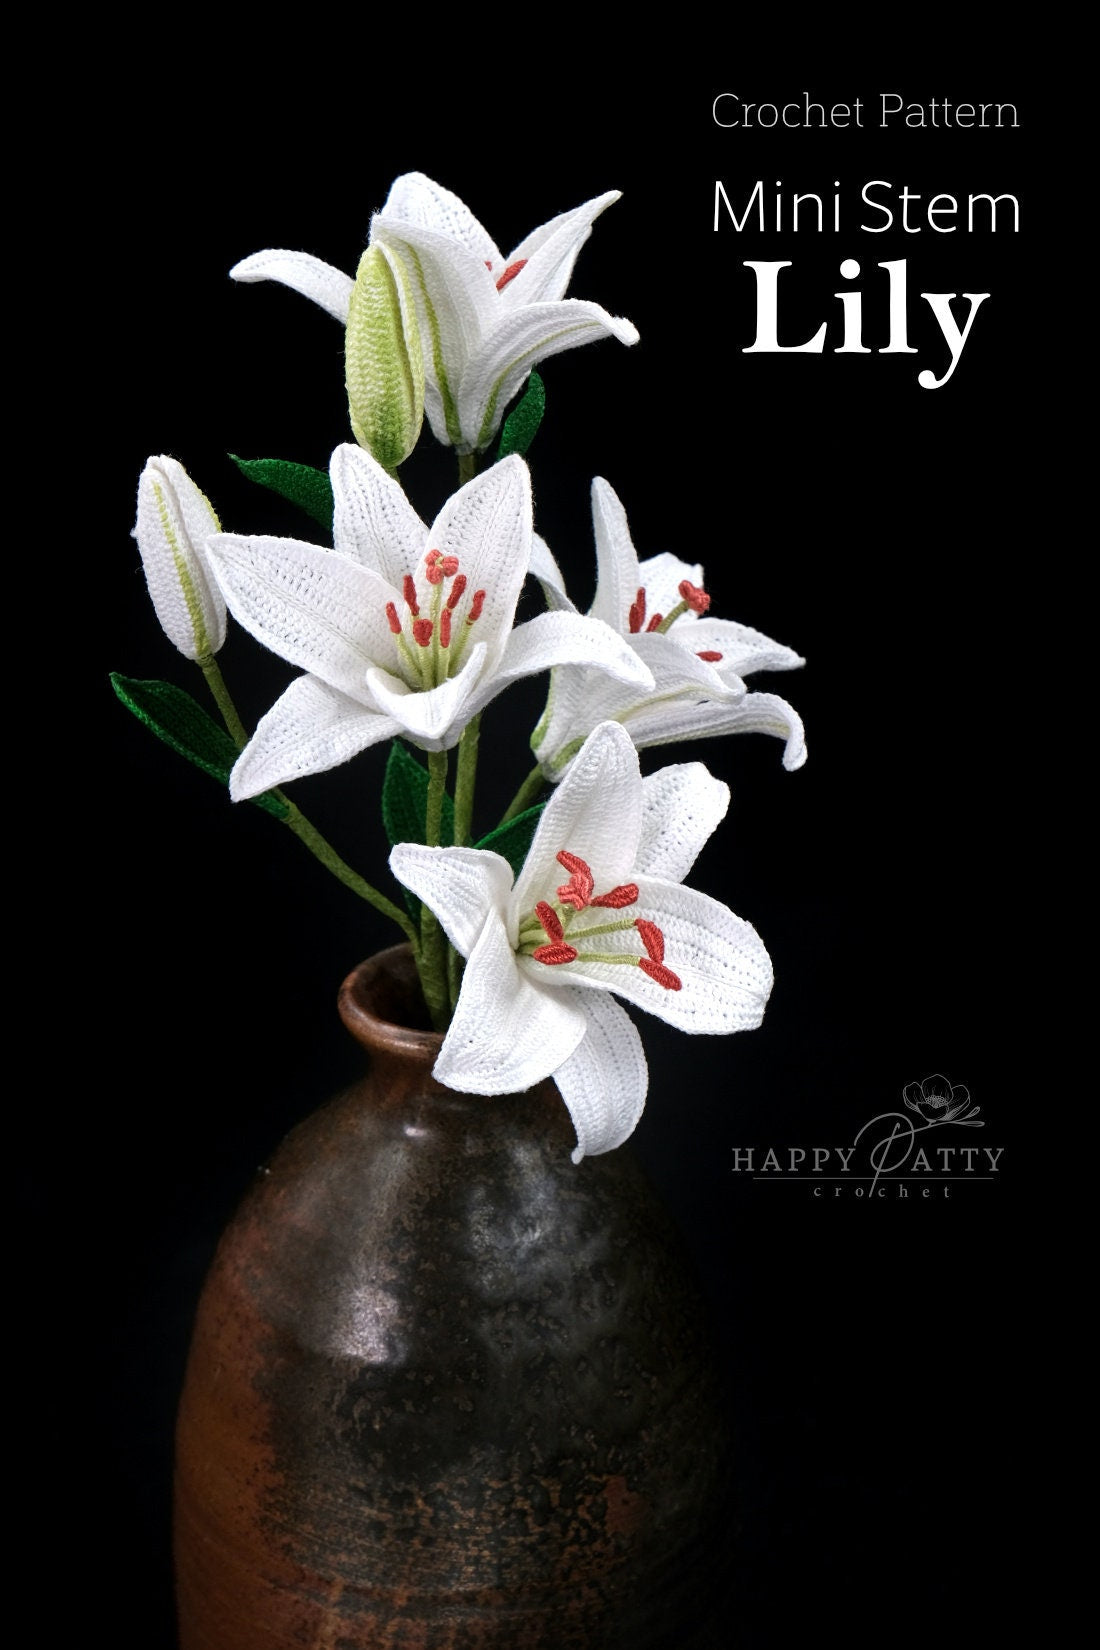 Mini Stem Lily Crochet Pattern - Crochet Flower Pattern for a Miniature Lily